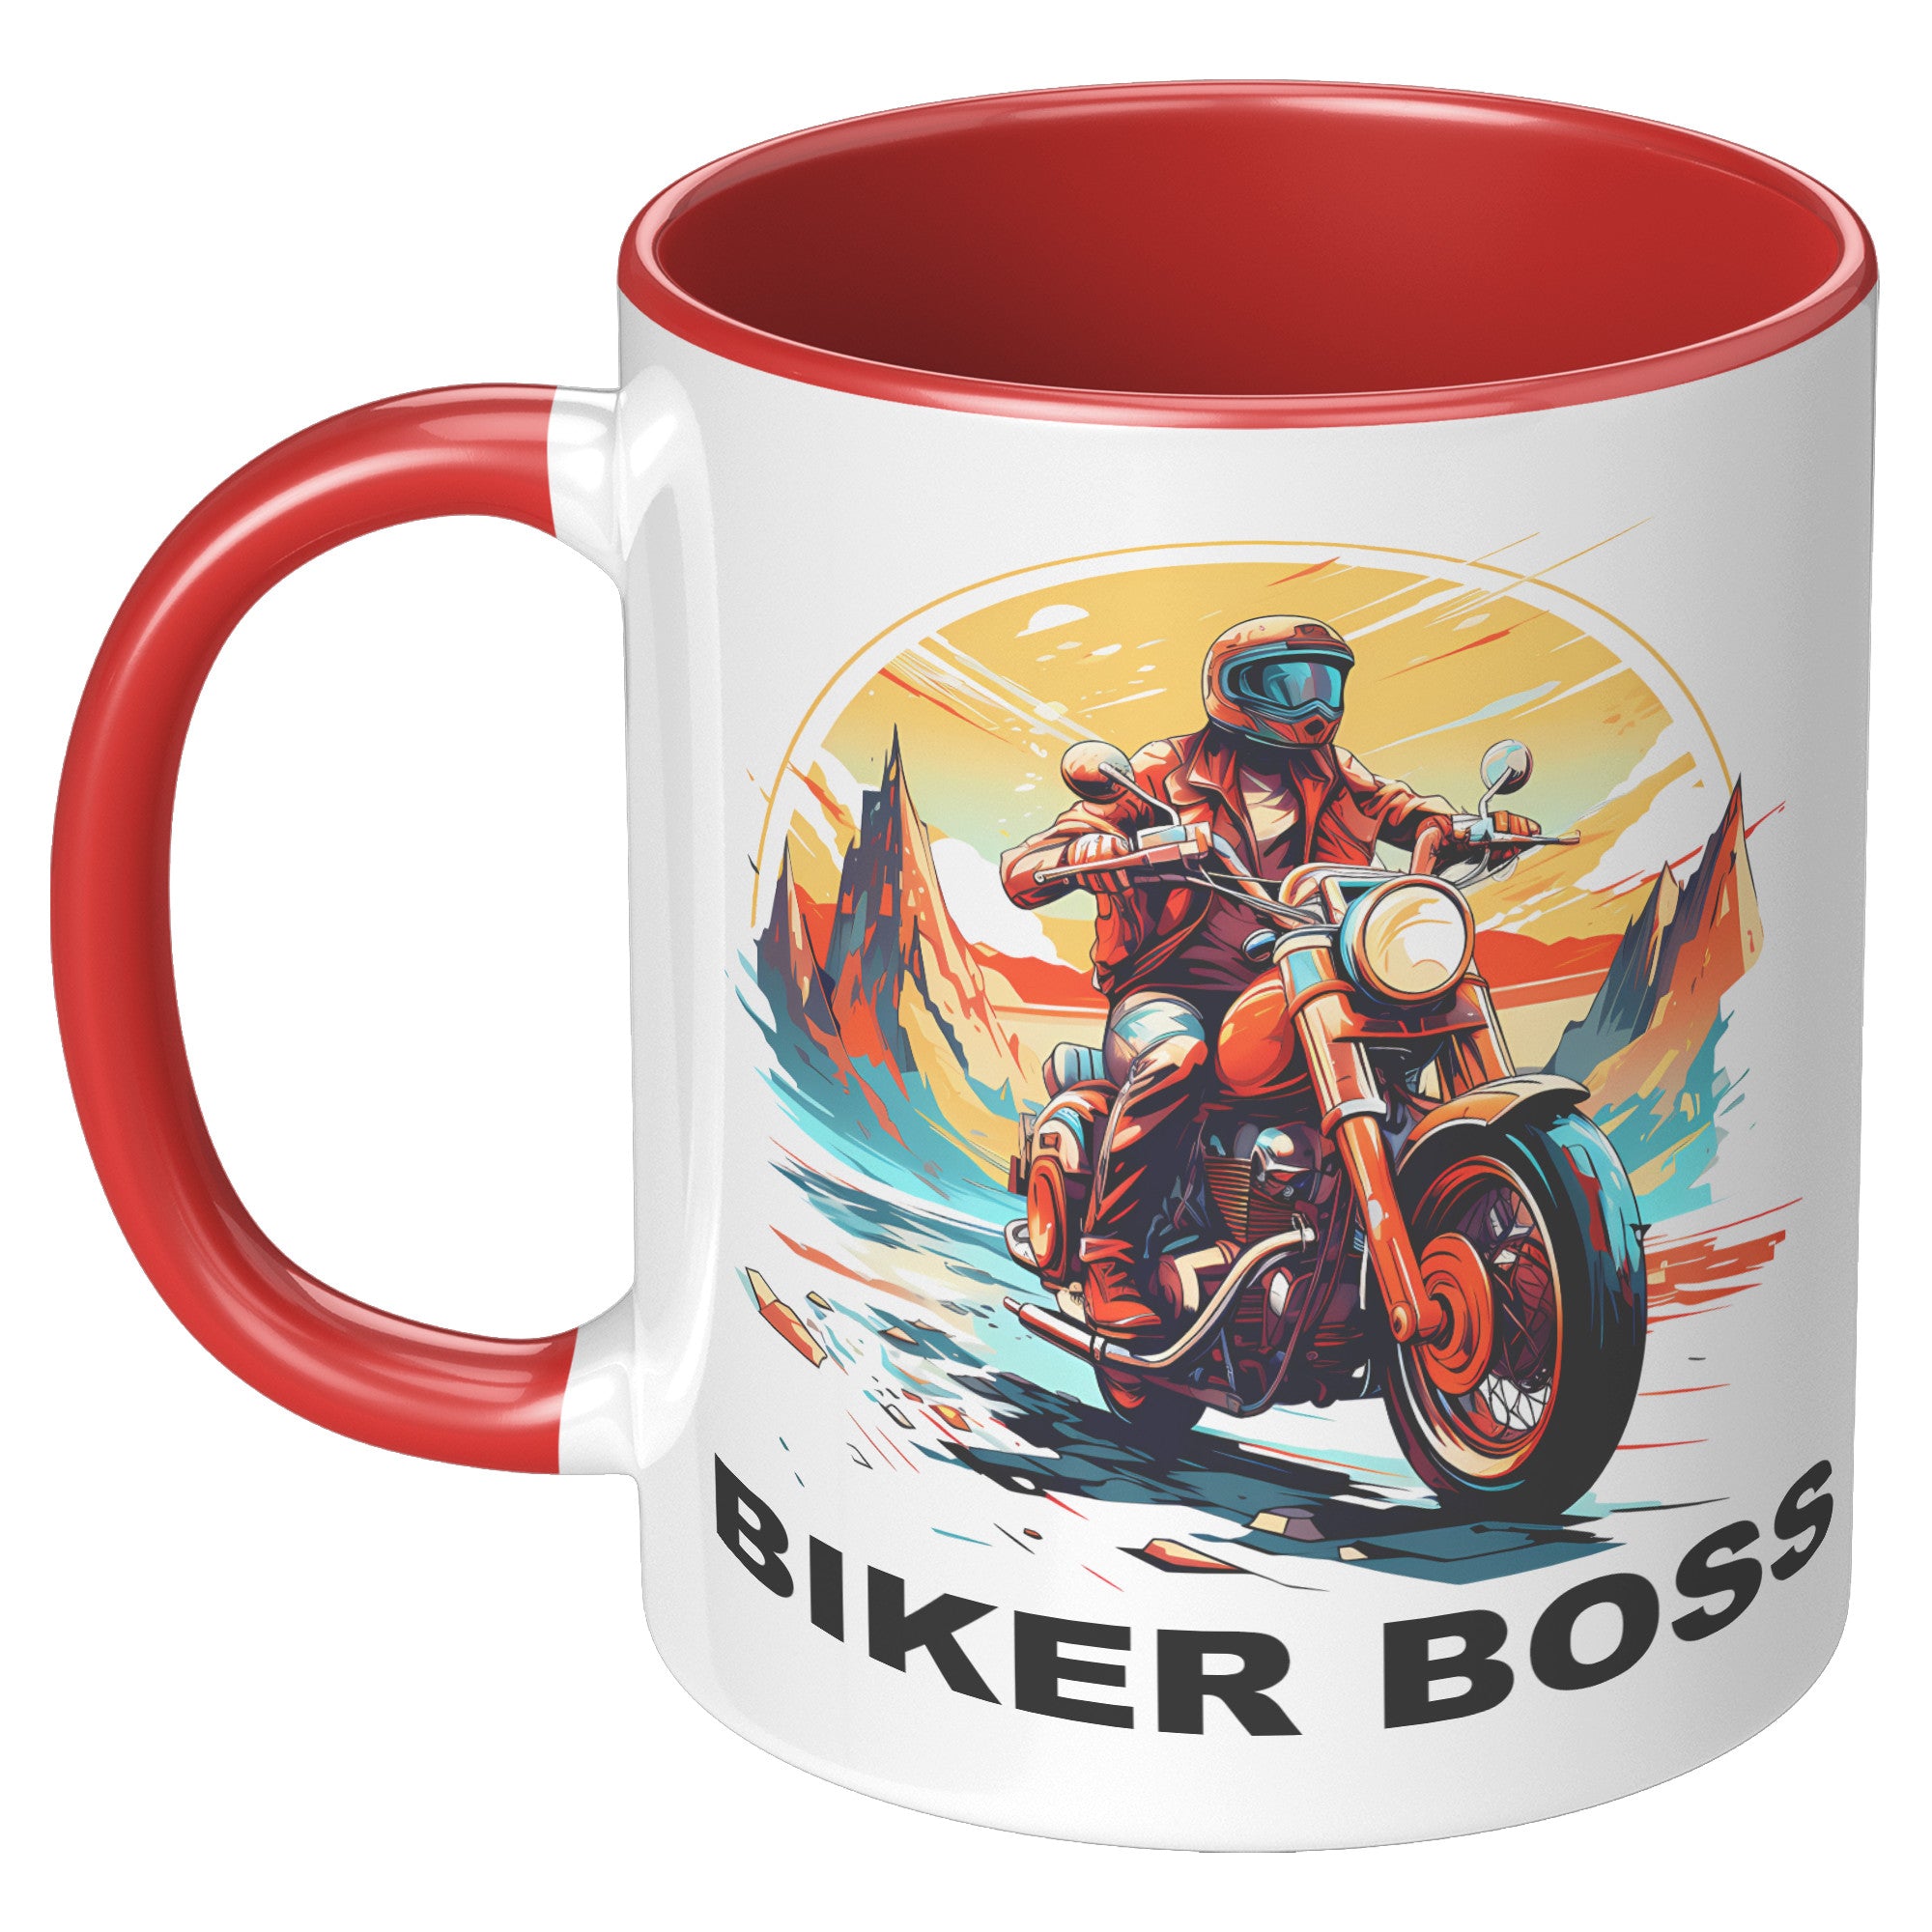 Biker Boss